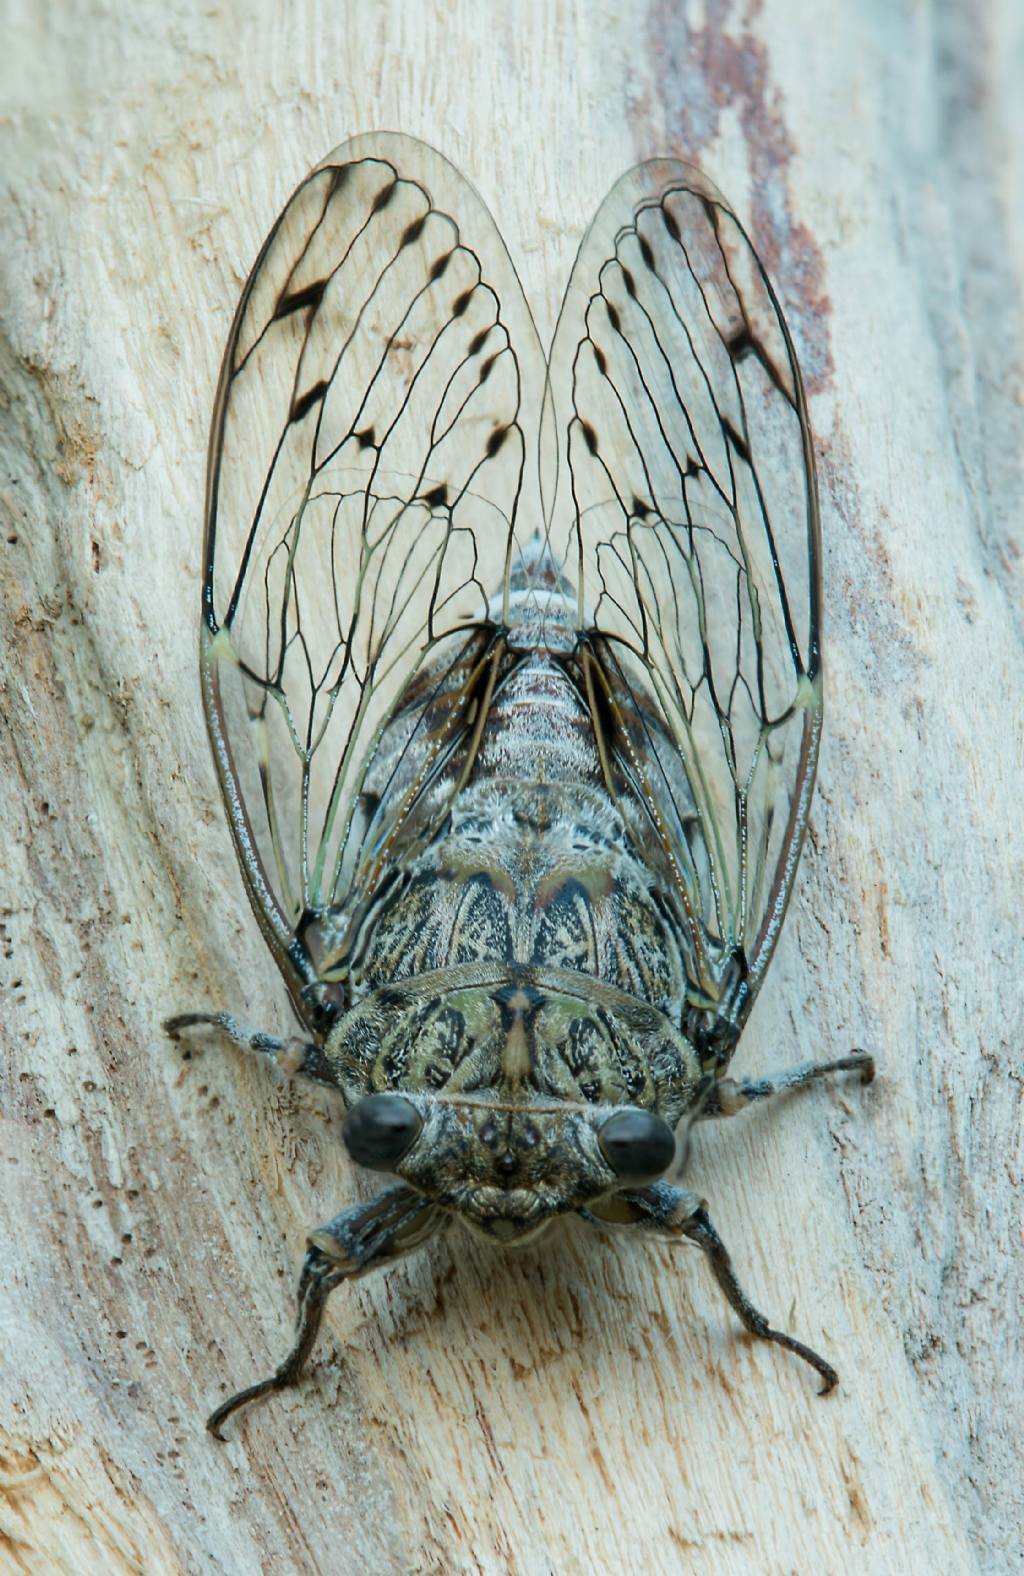 Probabile Cicada orni